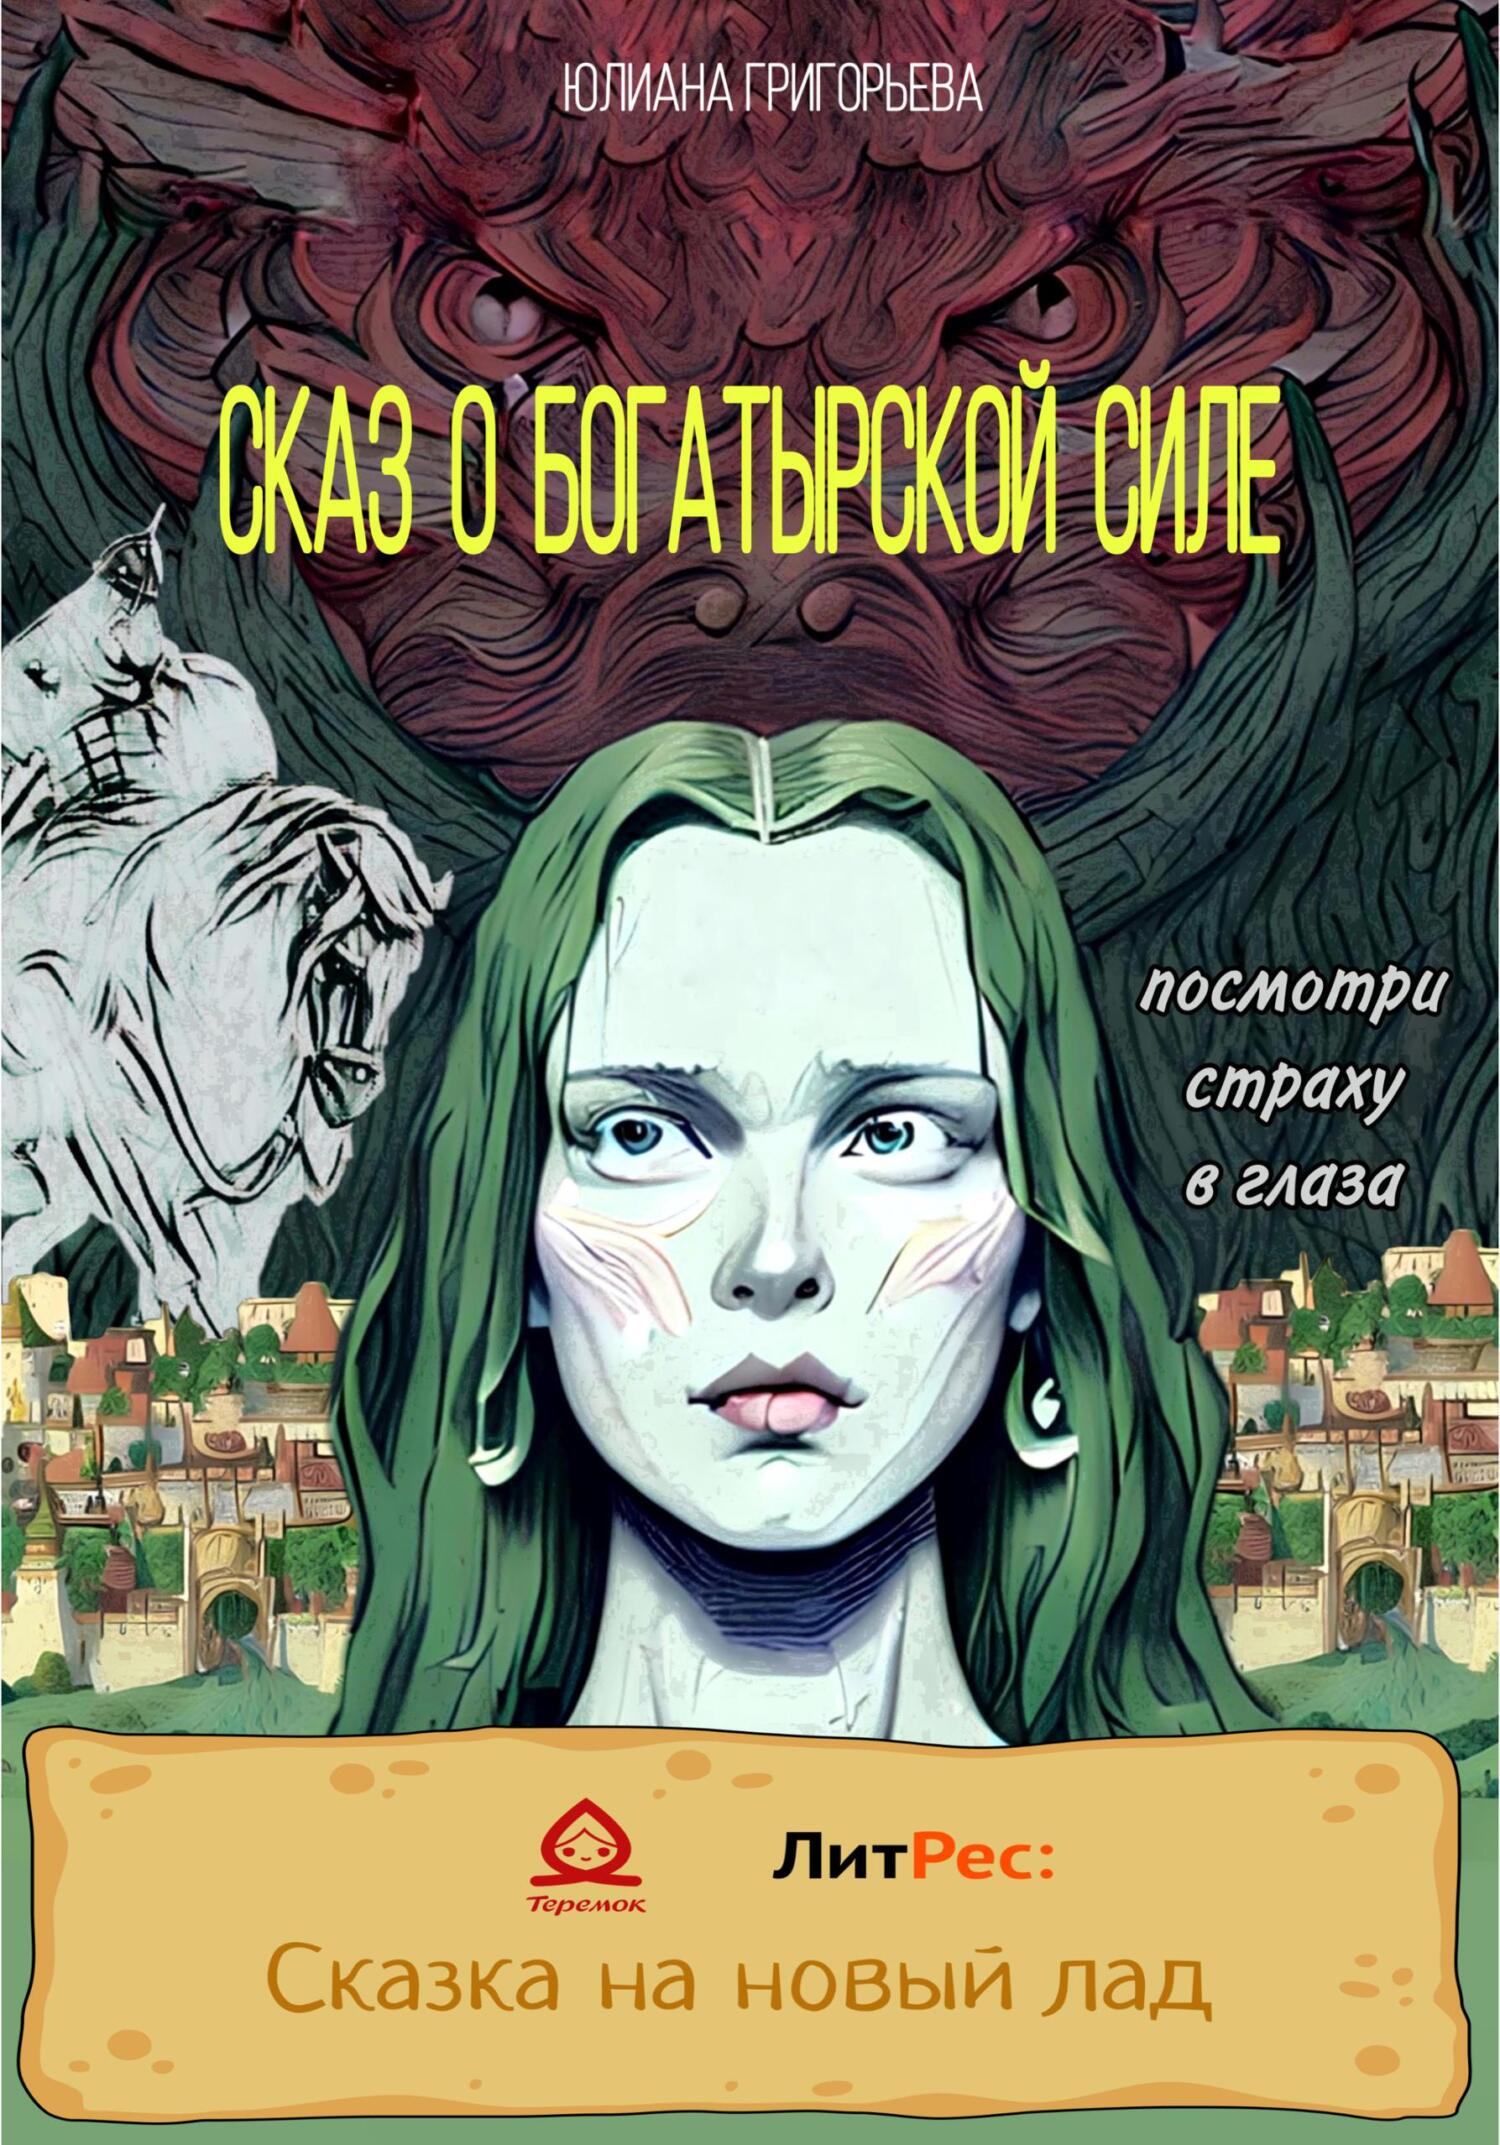 Сказ о богатырской силе - Юлиана Максимовна Григорьева